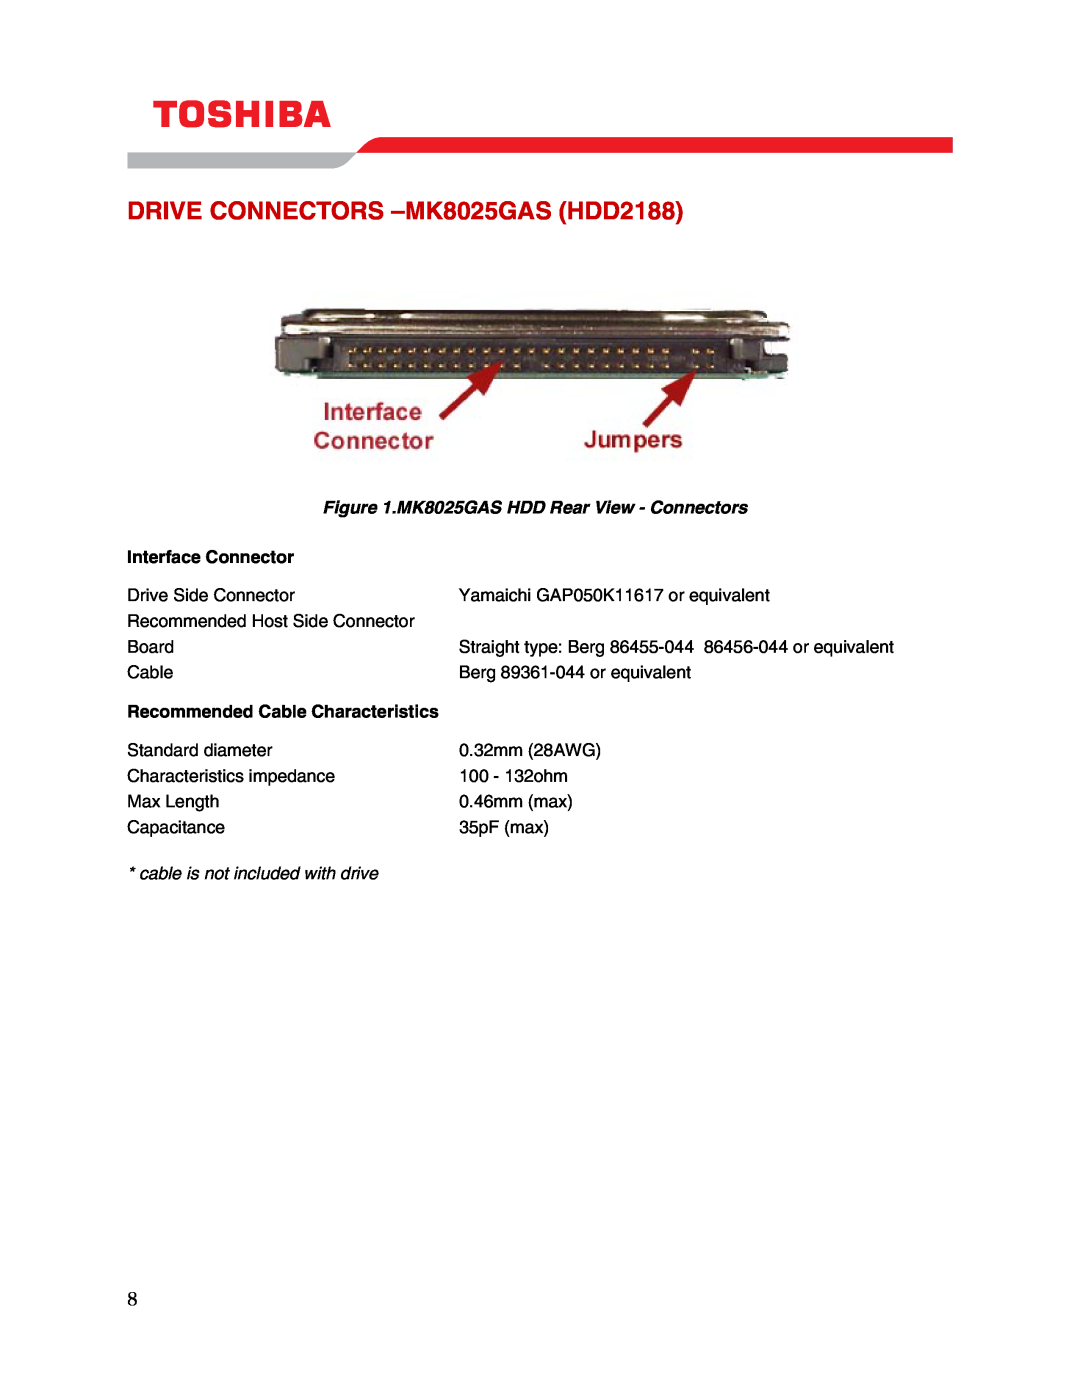 Toshiba user manual DRIVE CONNECTORS -MK8025GAS HDD2188, MK8025GAS HDD Rear View - Connectors, Interface Connector 